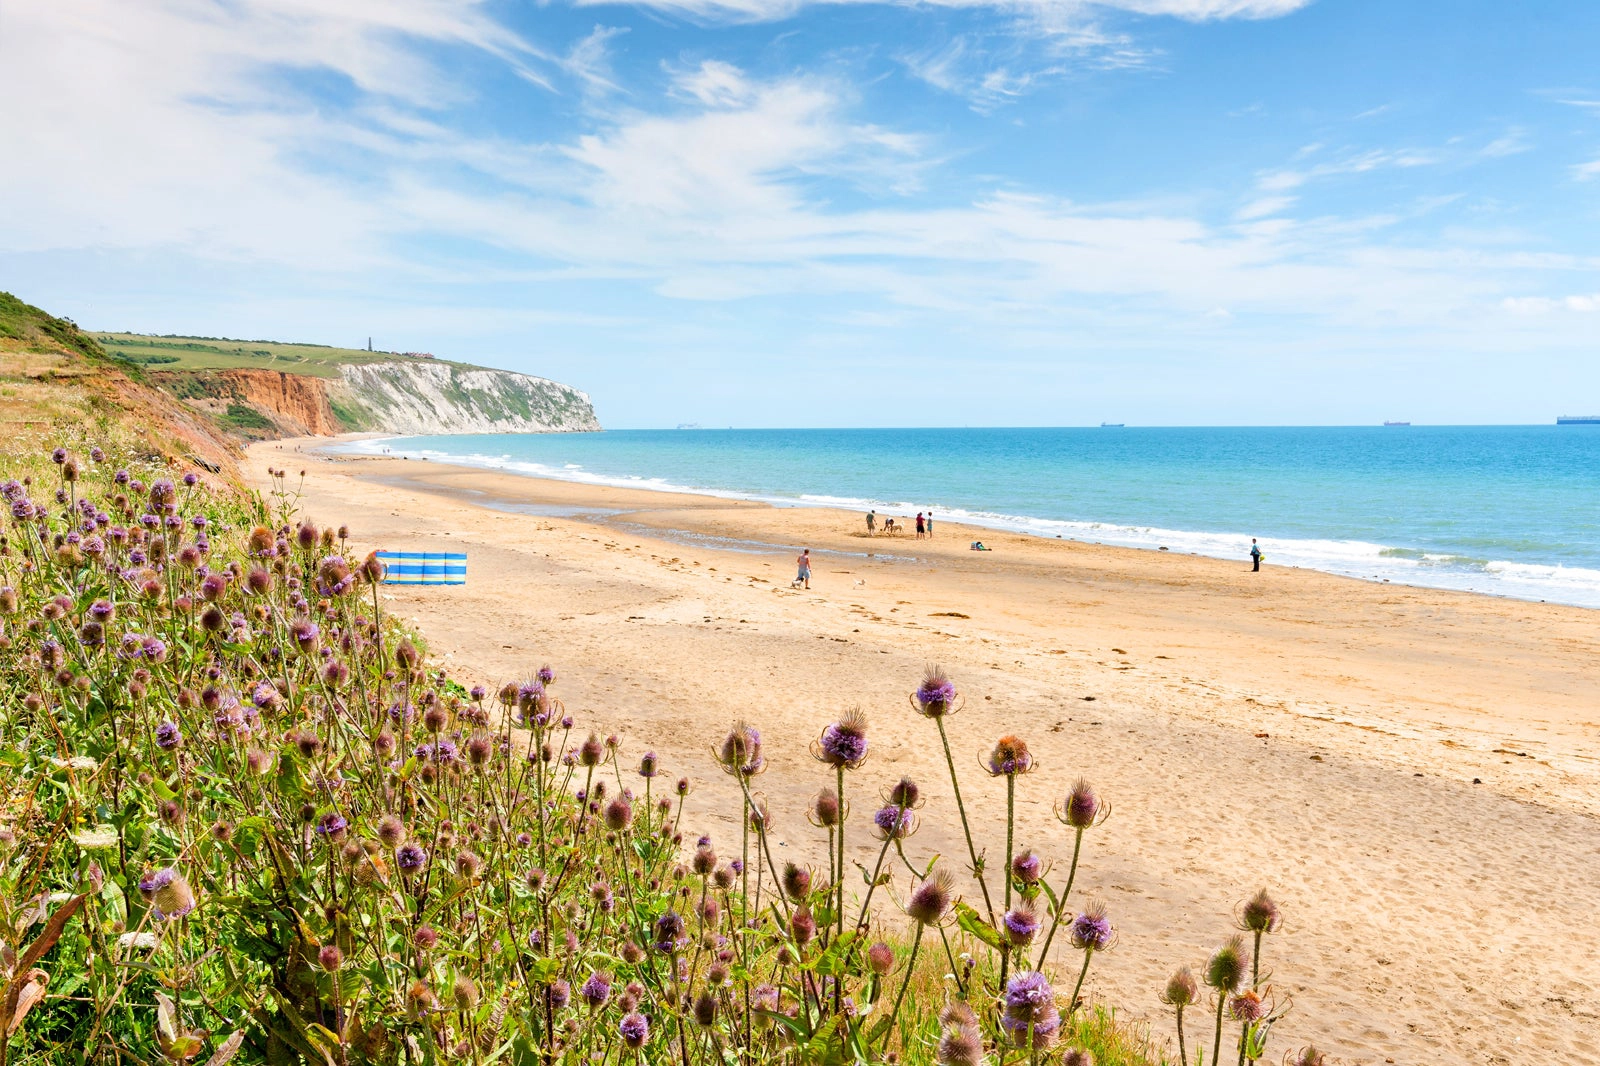  Isle of Wight  strand - Great Britain